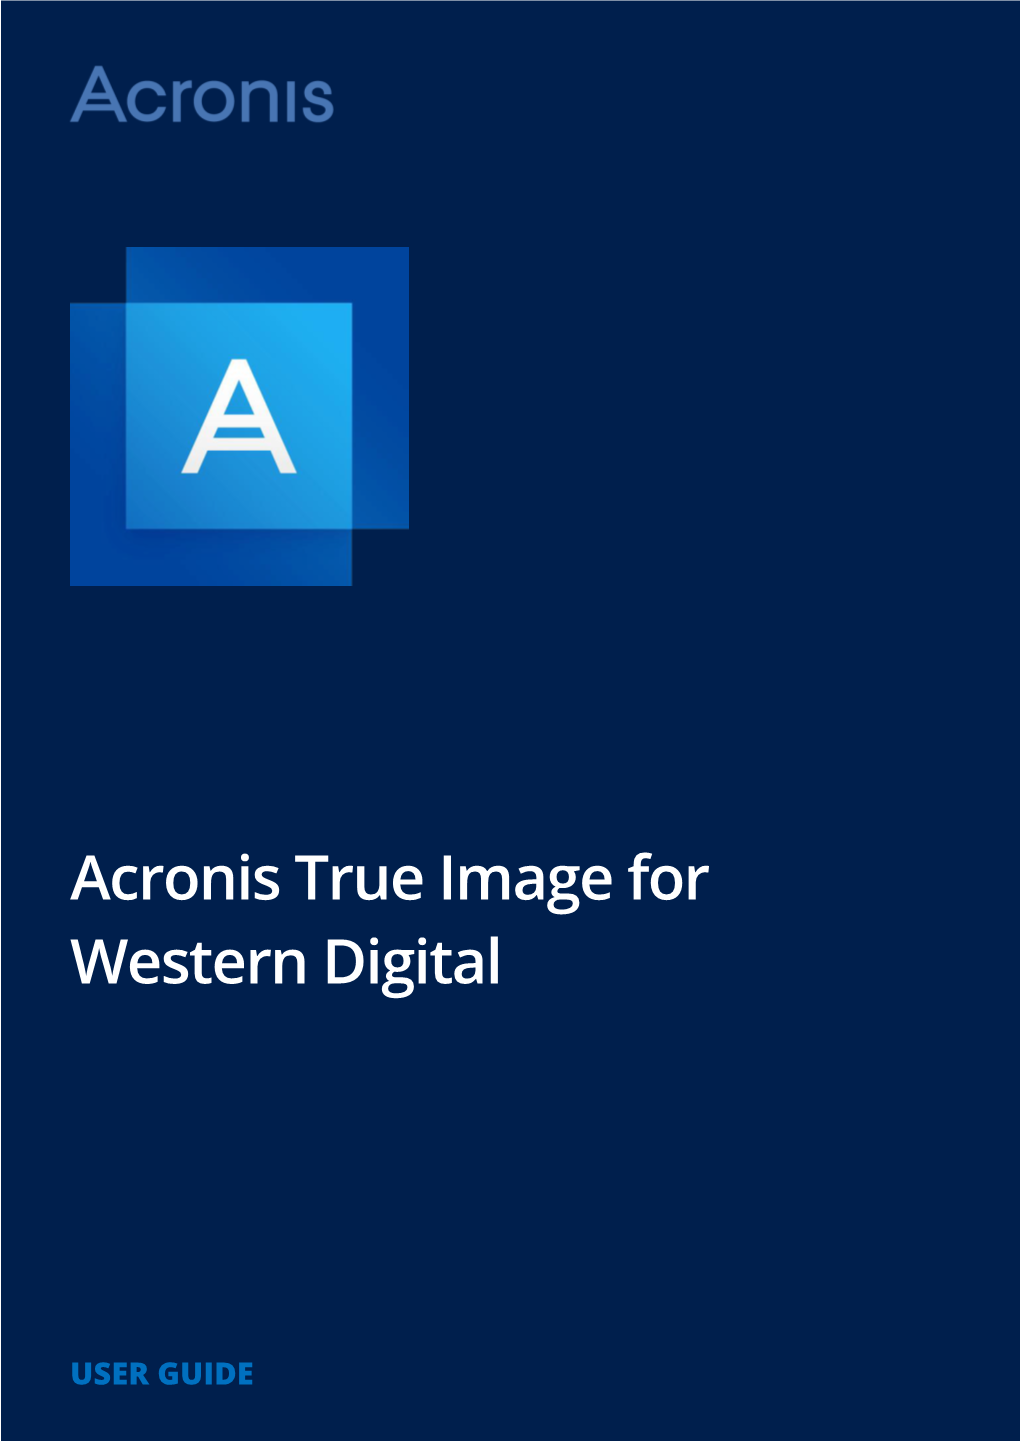 Acronis True Image for Western Digital